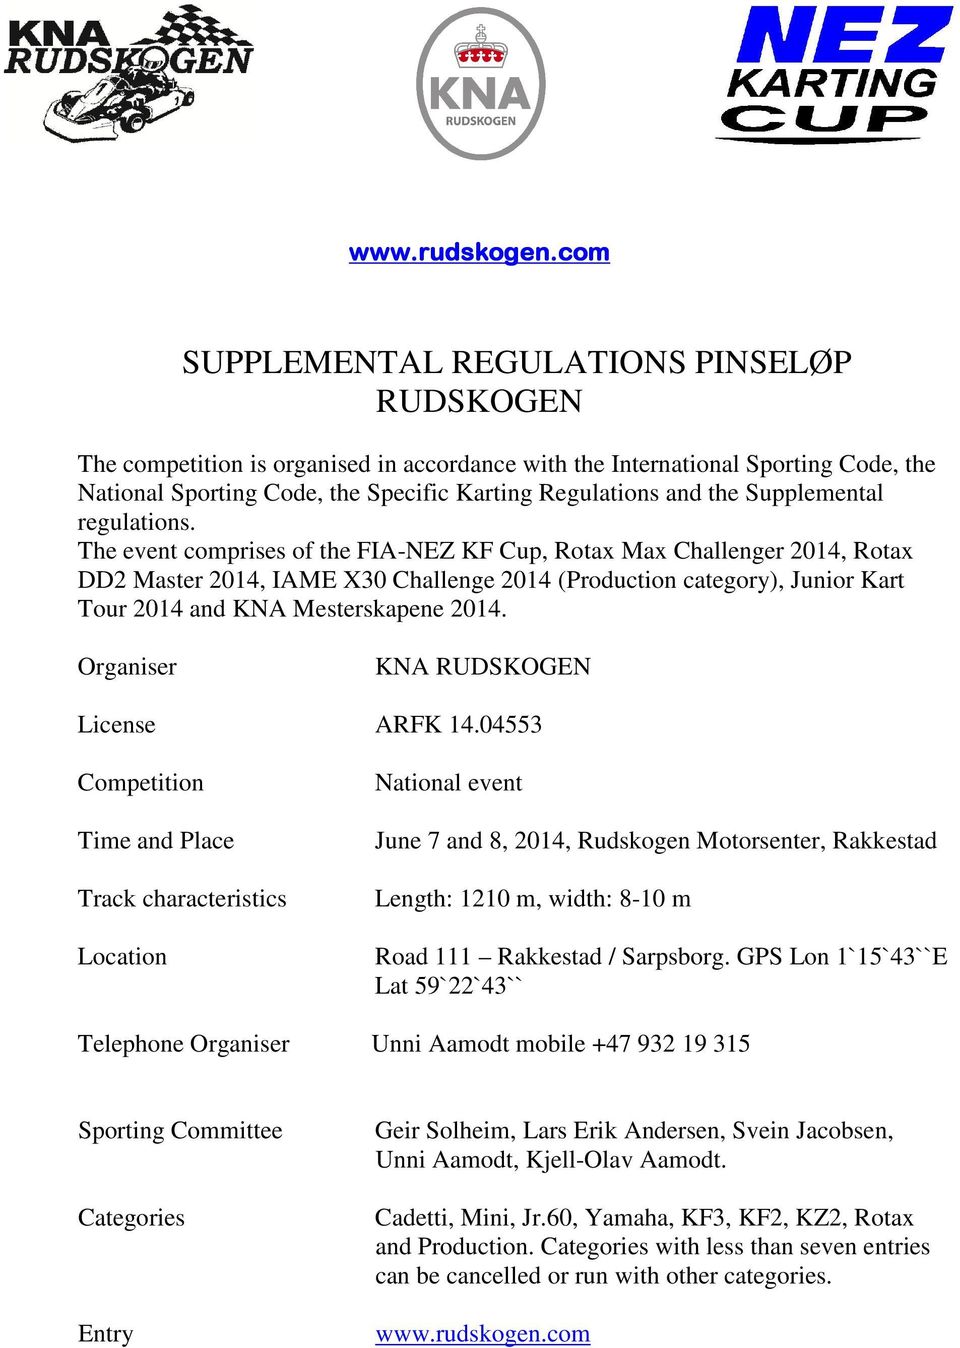 Supplemental regulations.